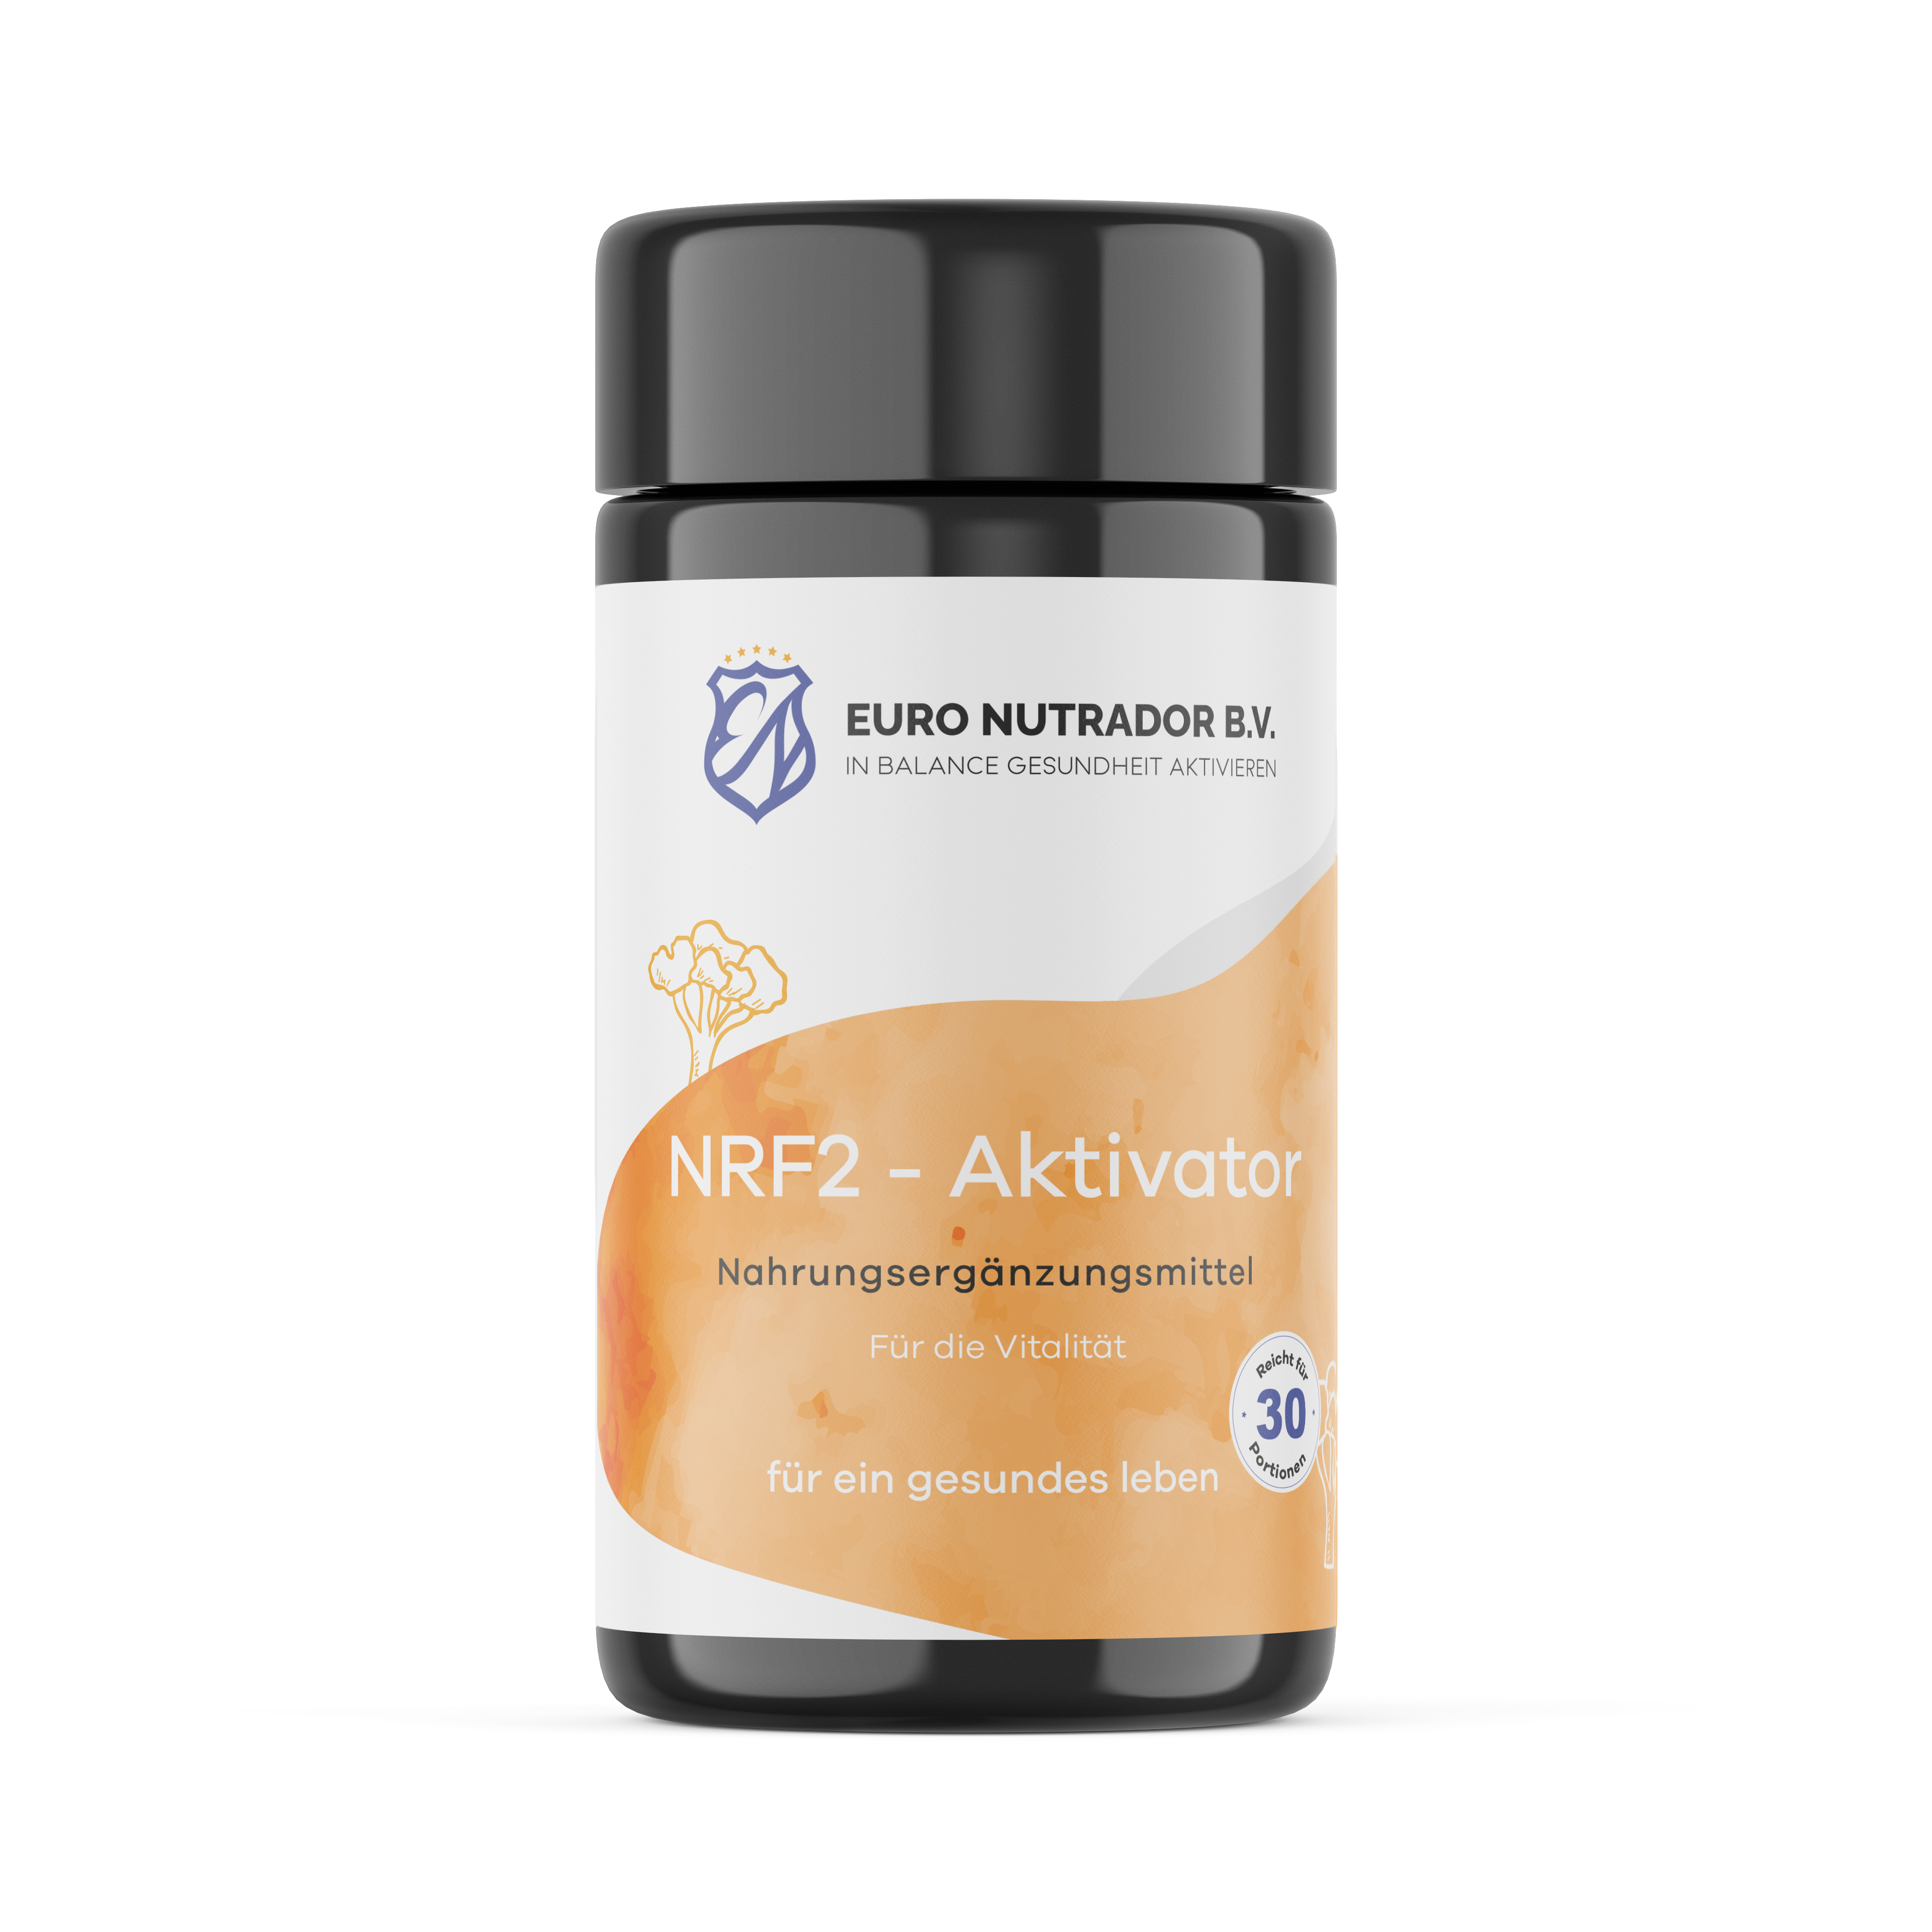 NRF2 - Aktivator